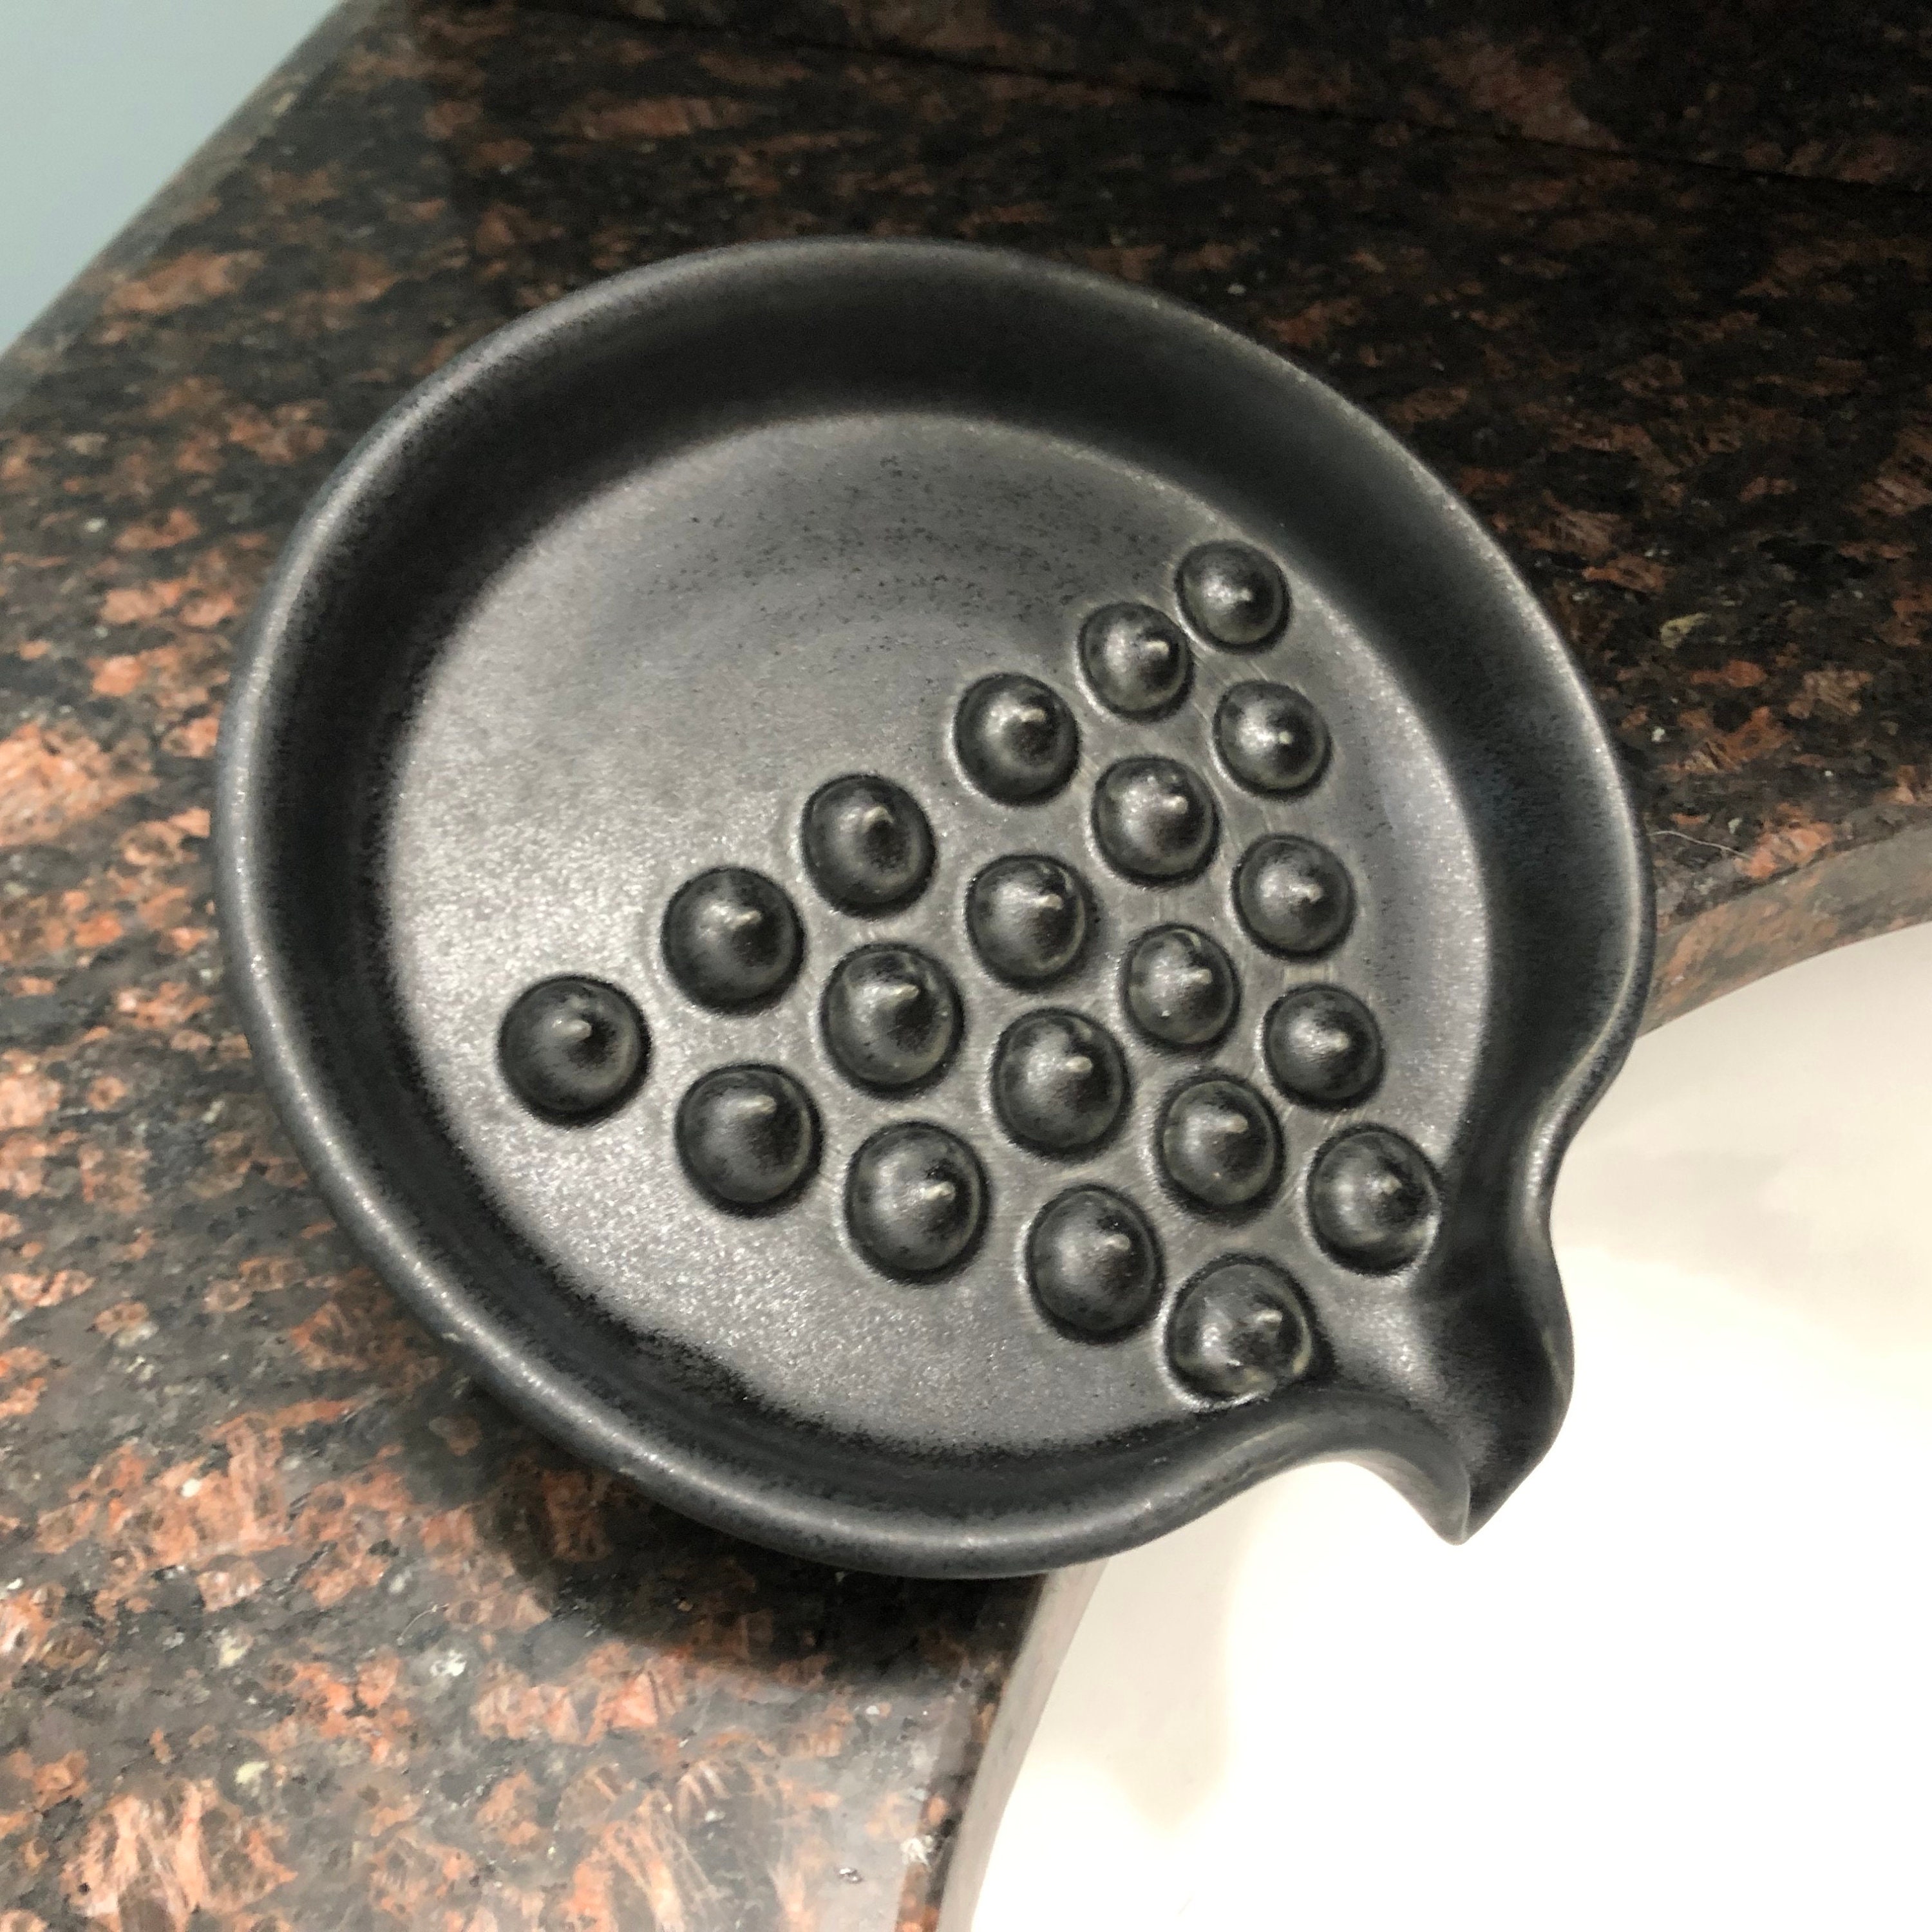 Self Draining Silicone Soap Dish Basalt Black